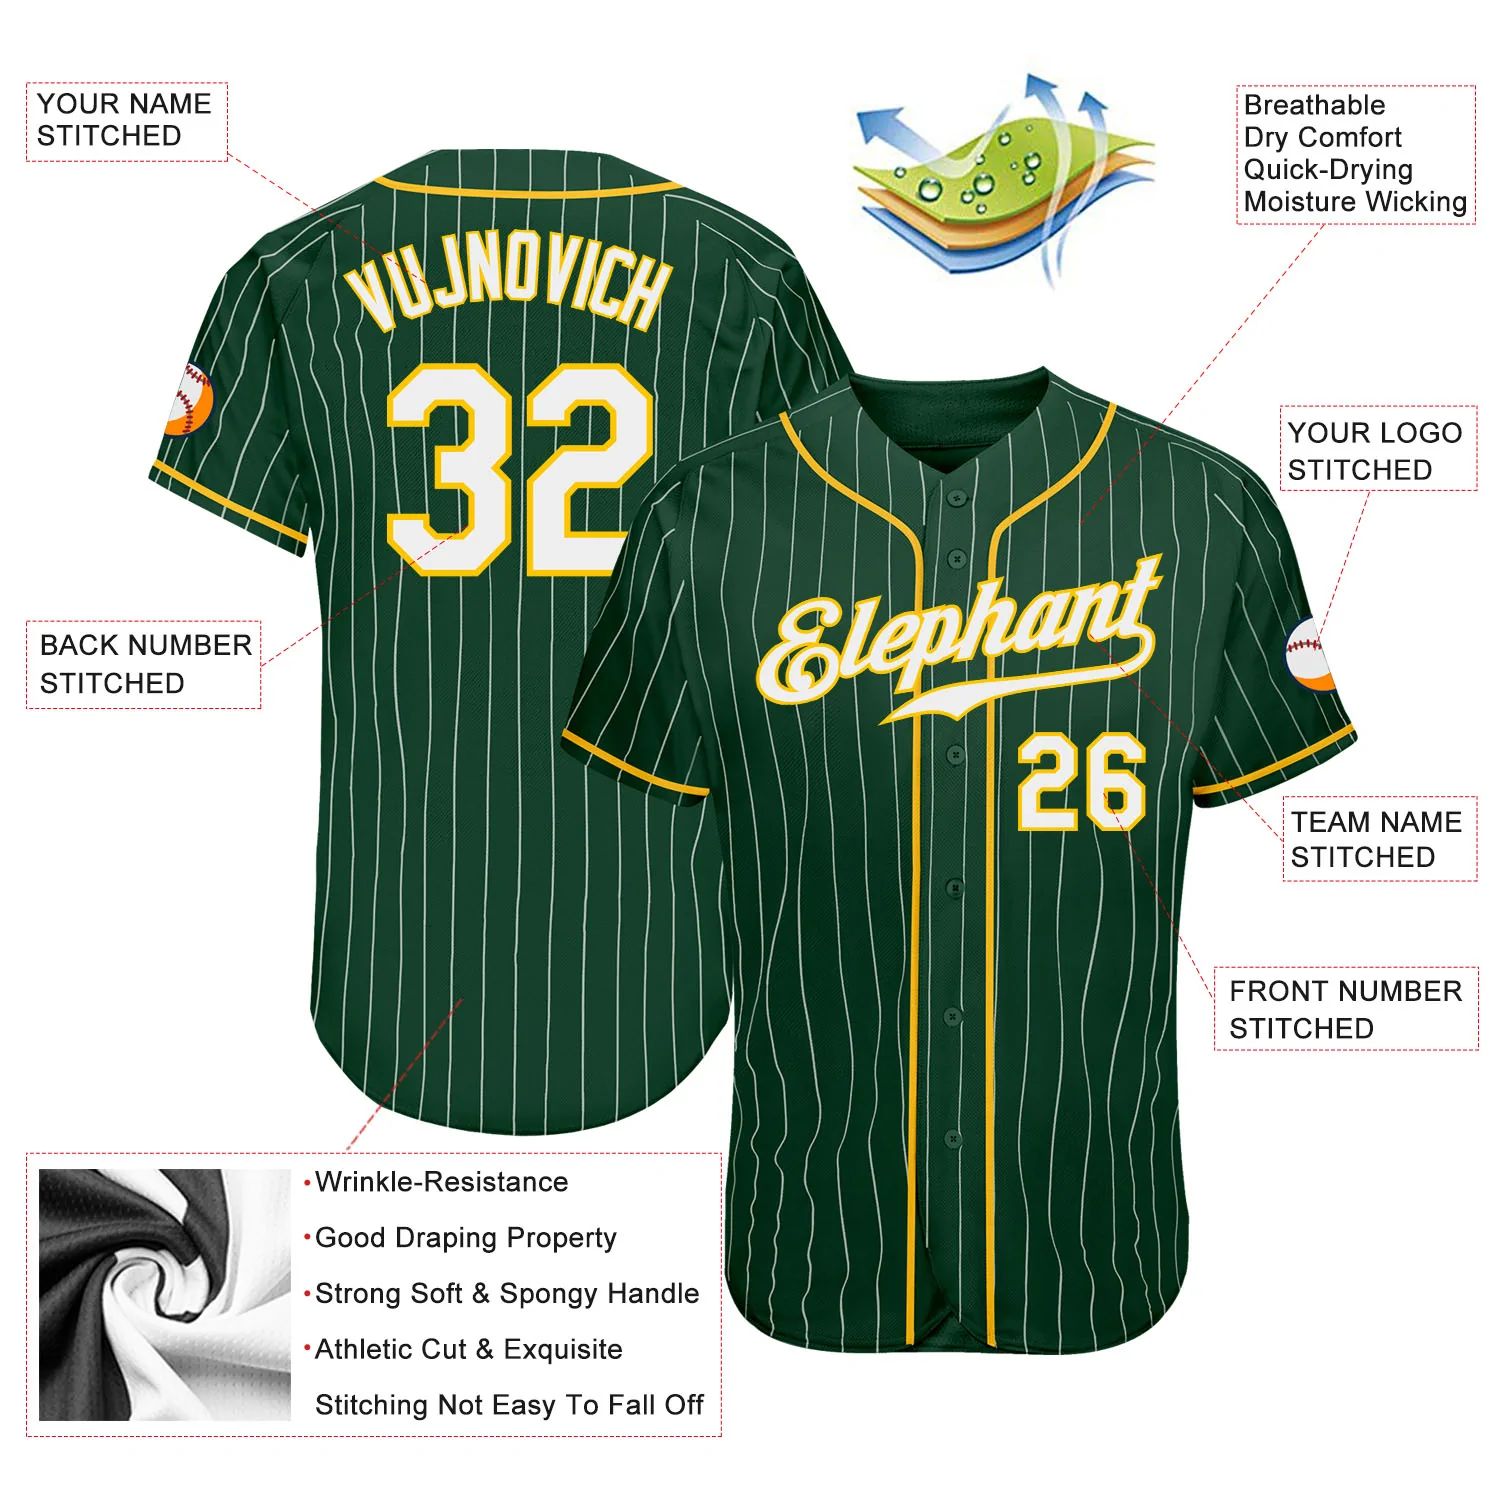 build-gold-green-baseball-white-jersey-authentic-green0047-online-3.jpg